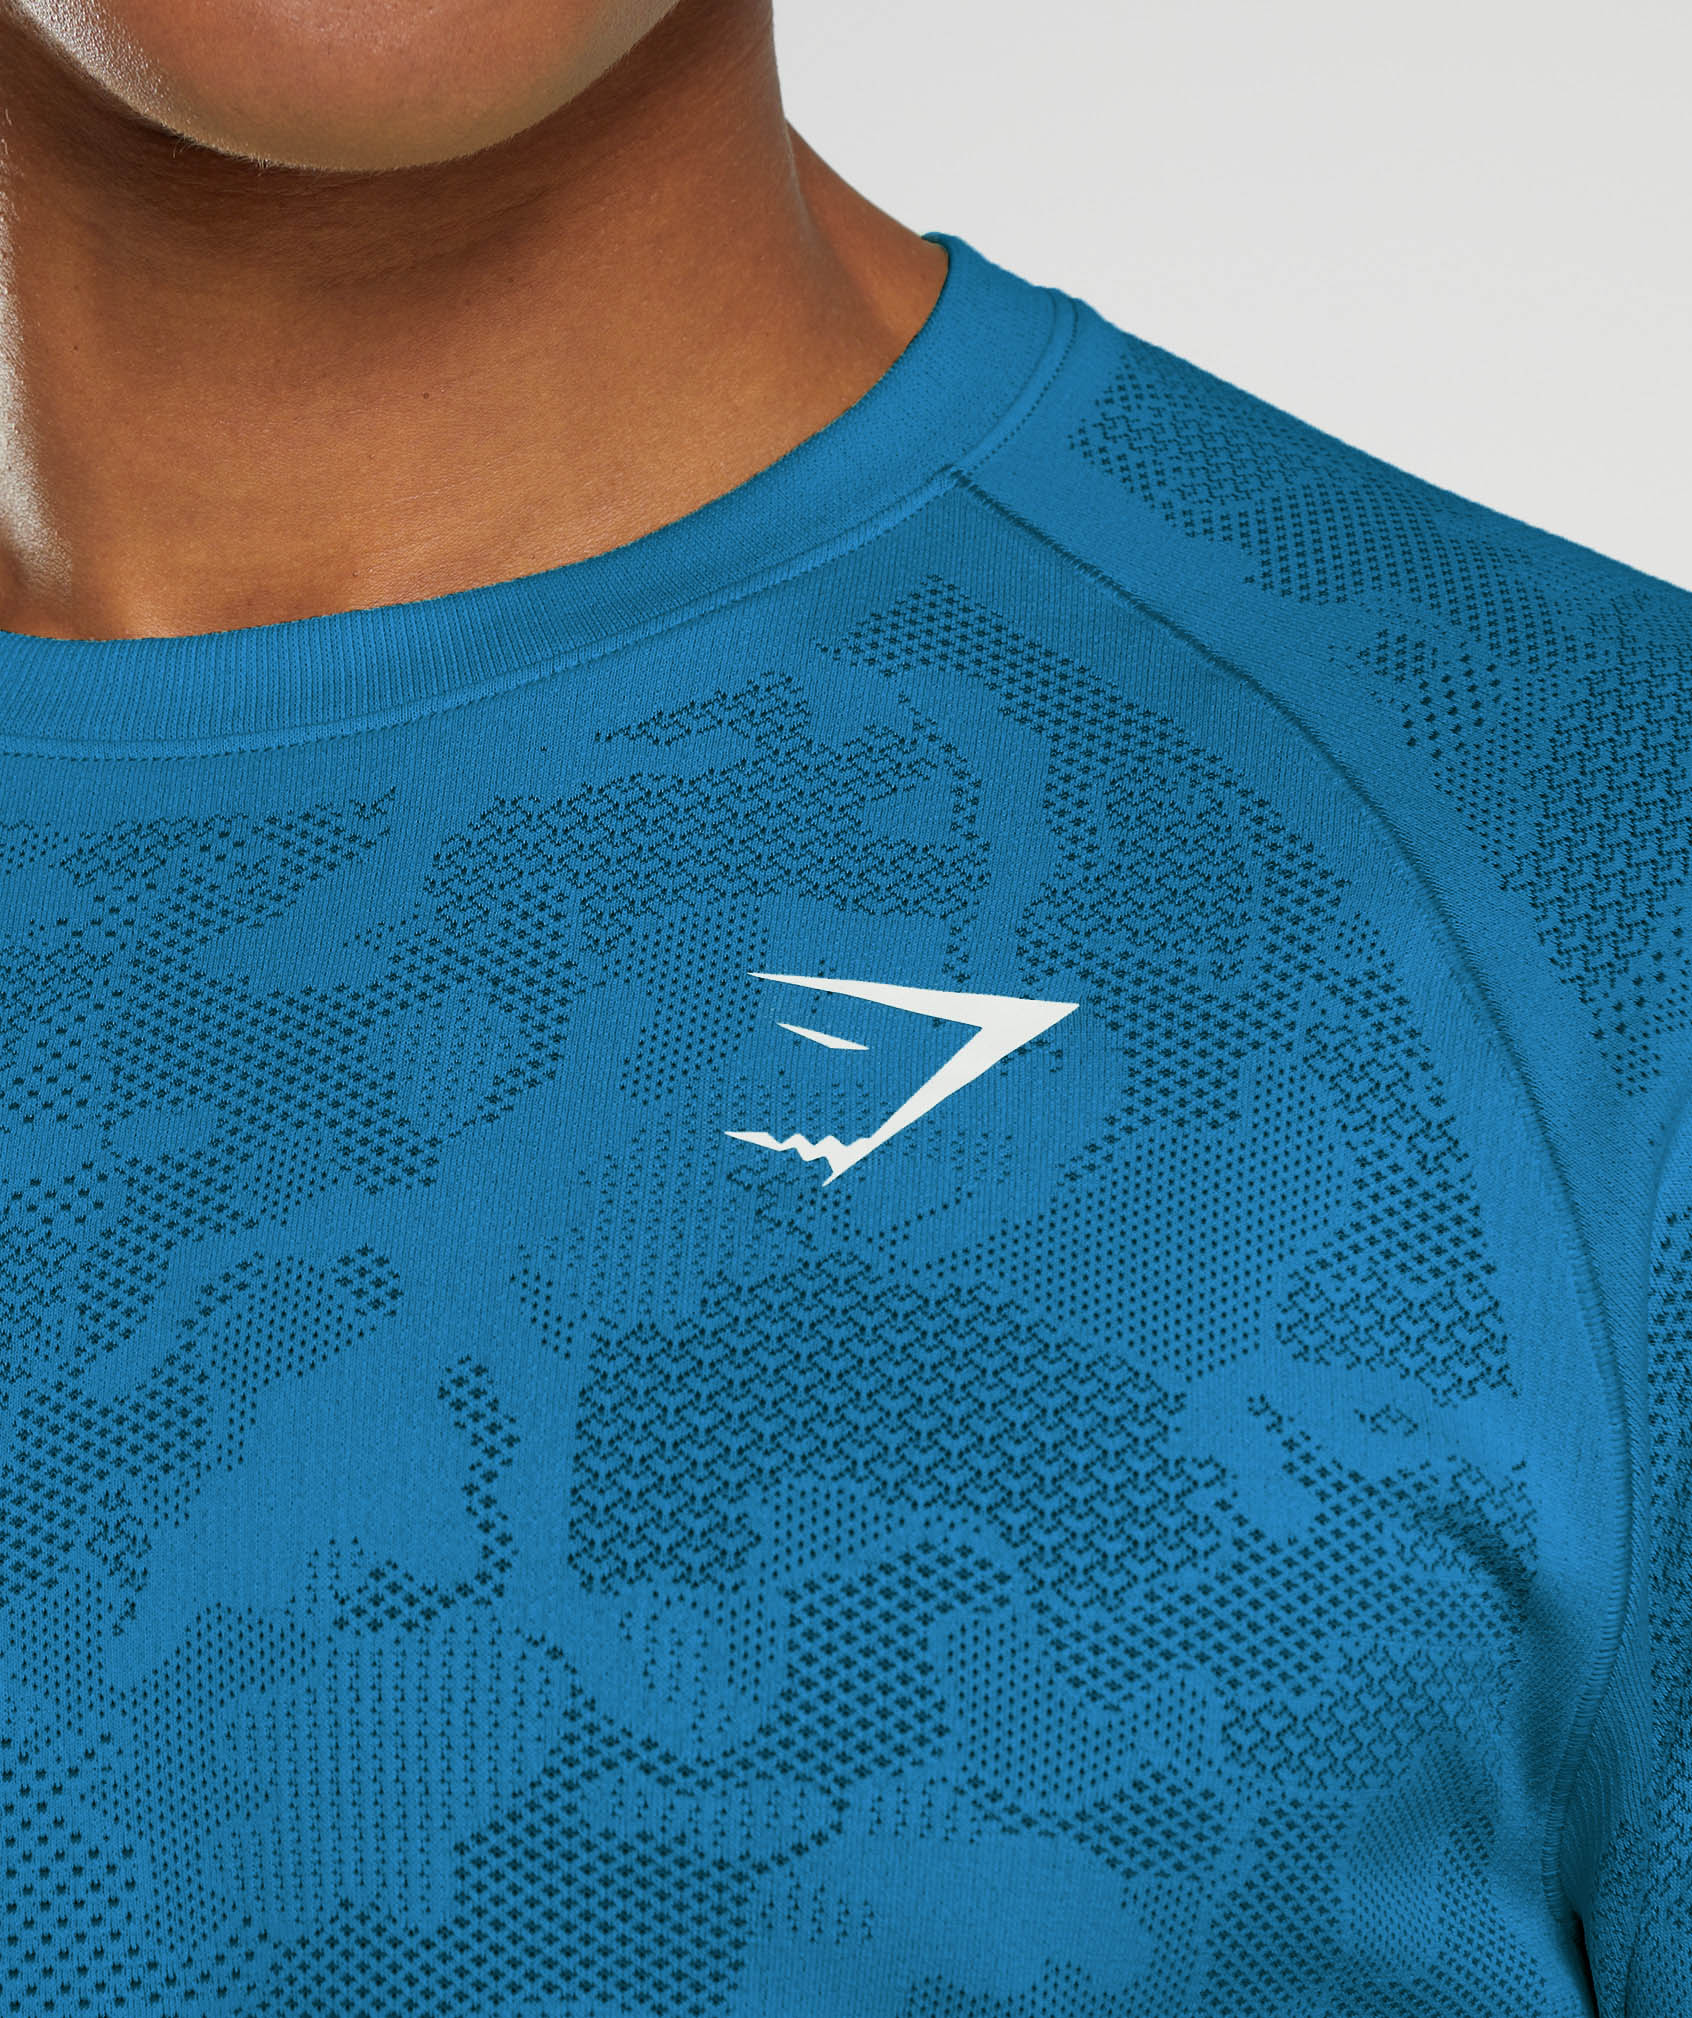 Geo Seamless Long Sleeve T-Shirt in Atlantic Blue/Shark Blue